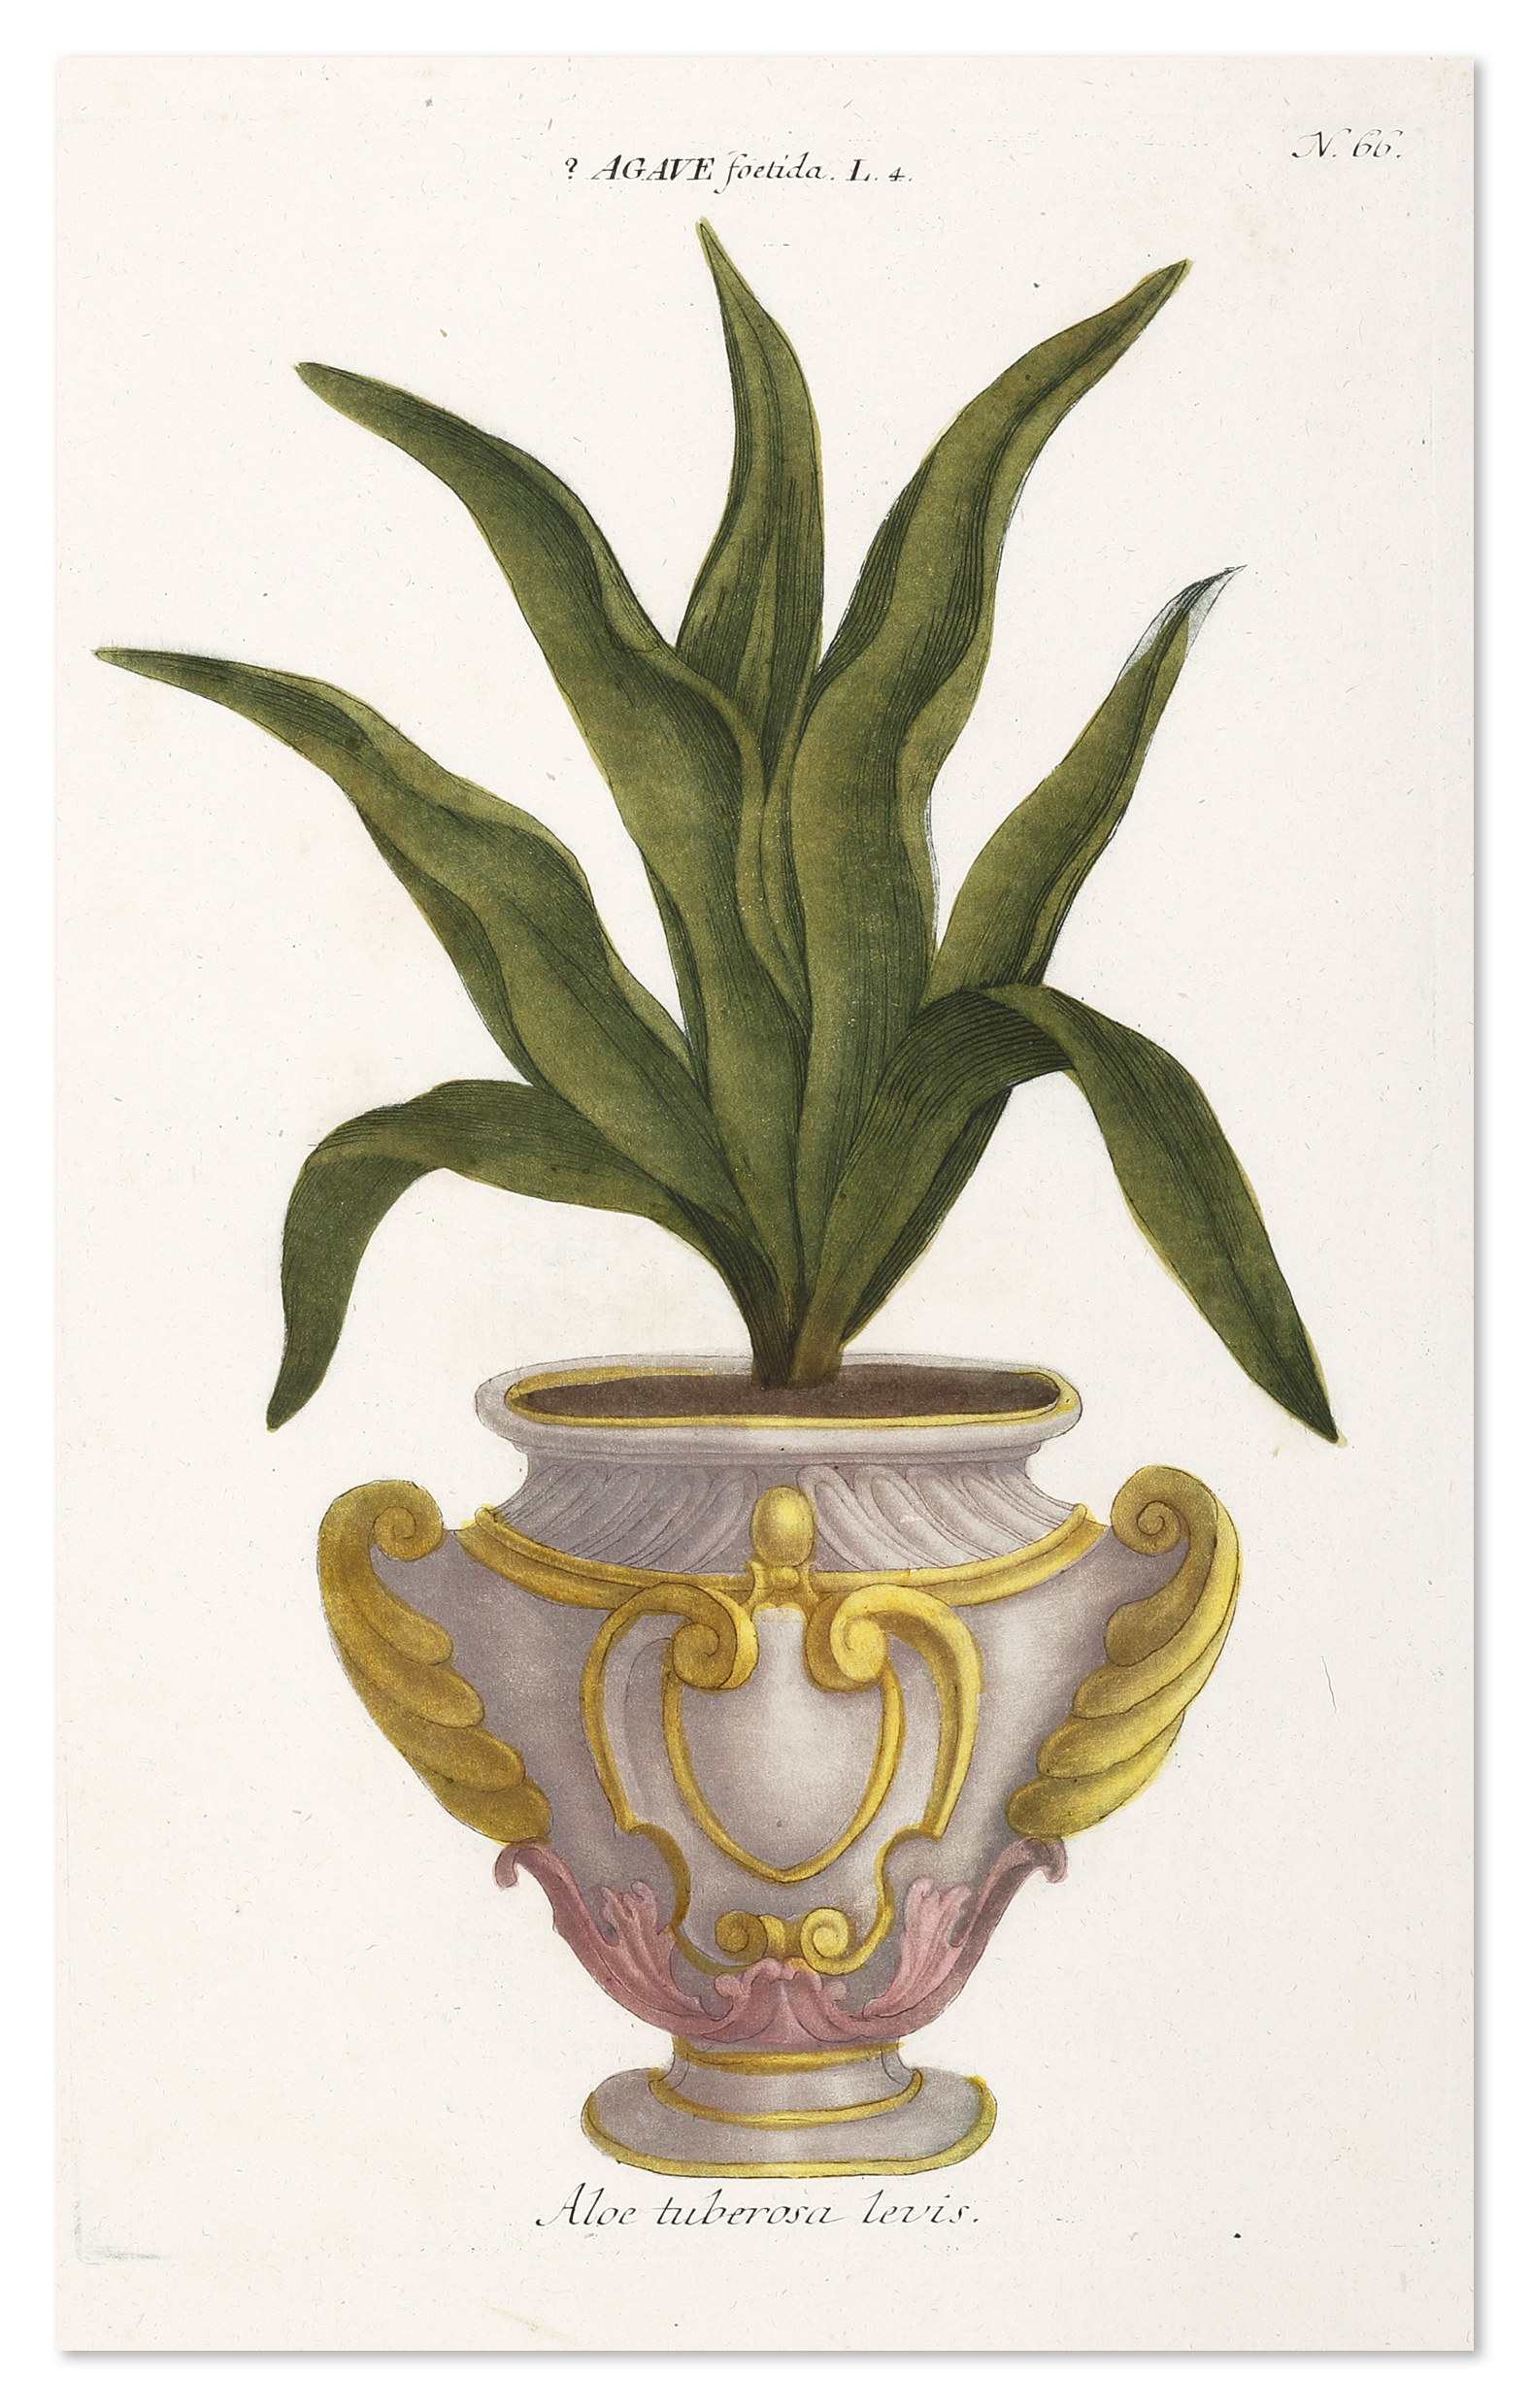 Aloe tuberosa levis - Antique Print from 1736